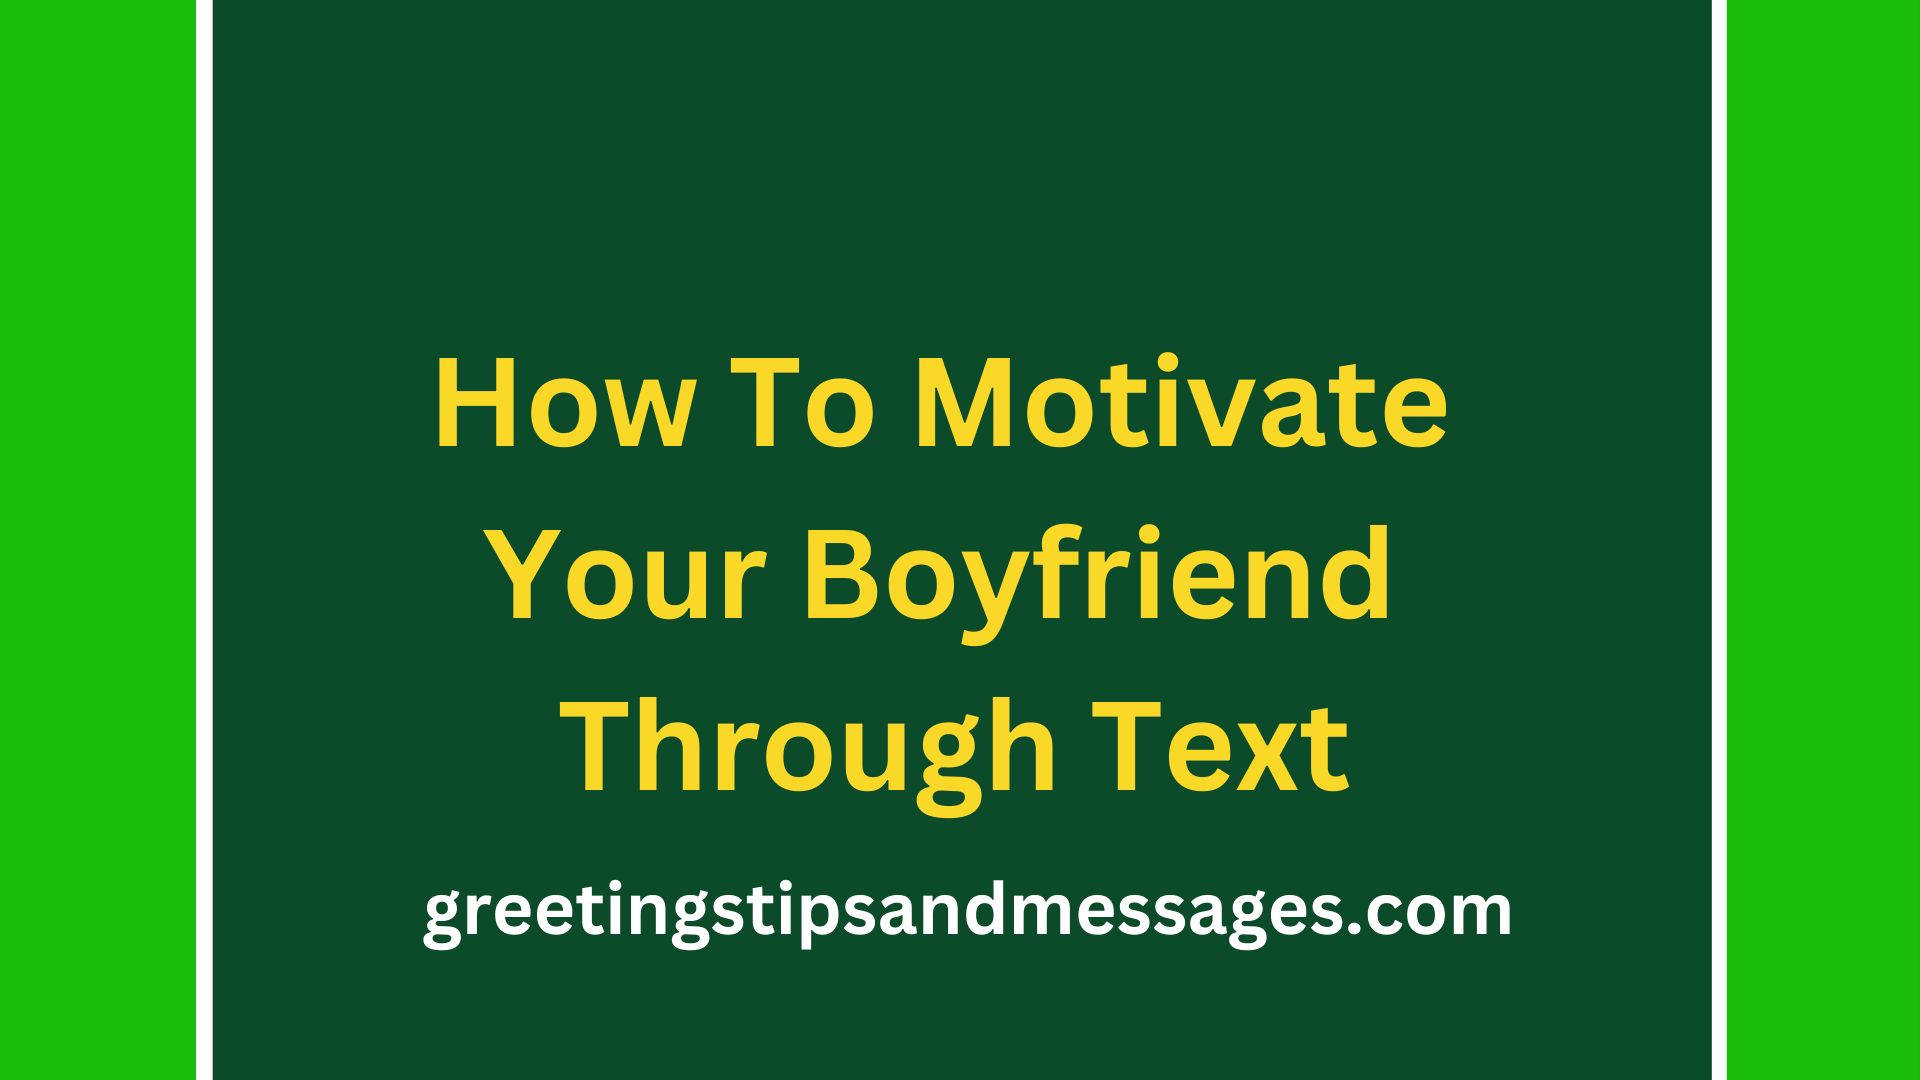 How To Motivate Your Boyfriend Through Text